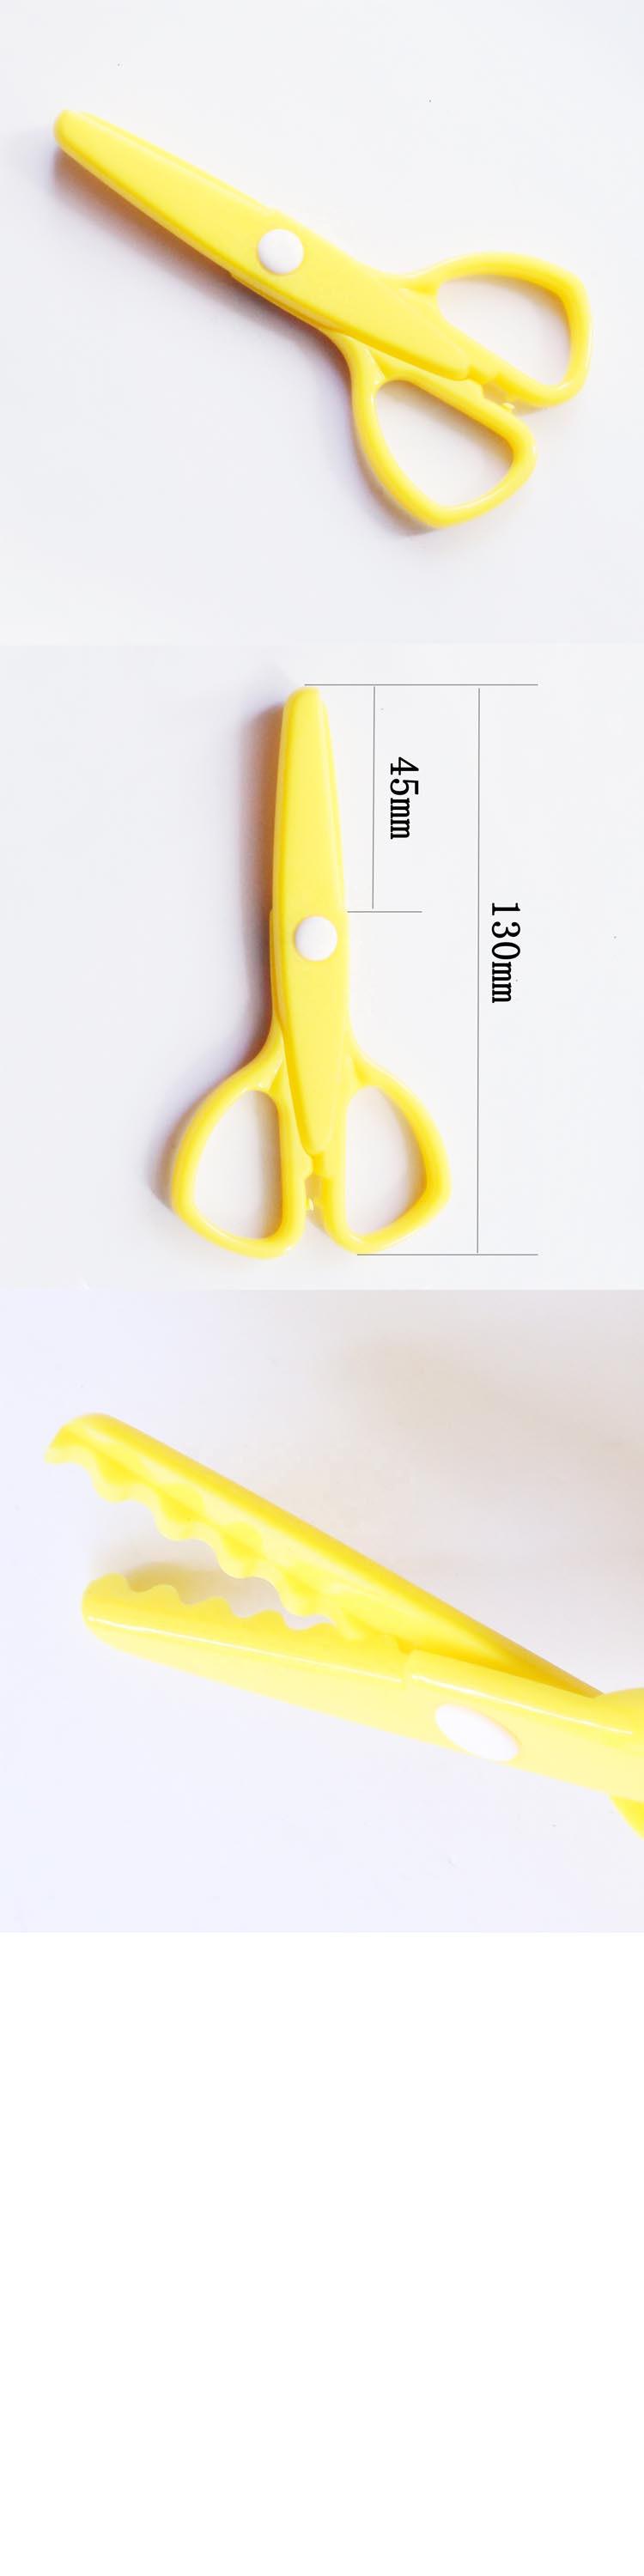 Provide Blunt Mini Craft Safe Design Kids Student Plastic Stationery Scissors Office plastic scissors for little kids